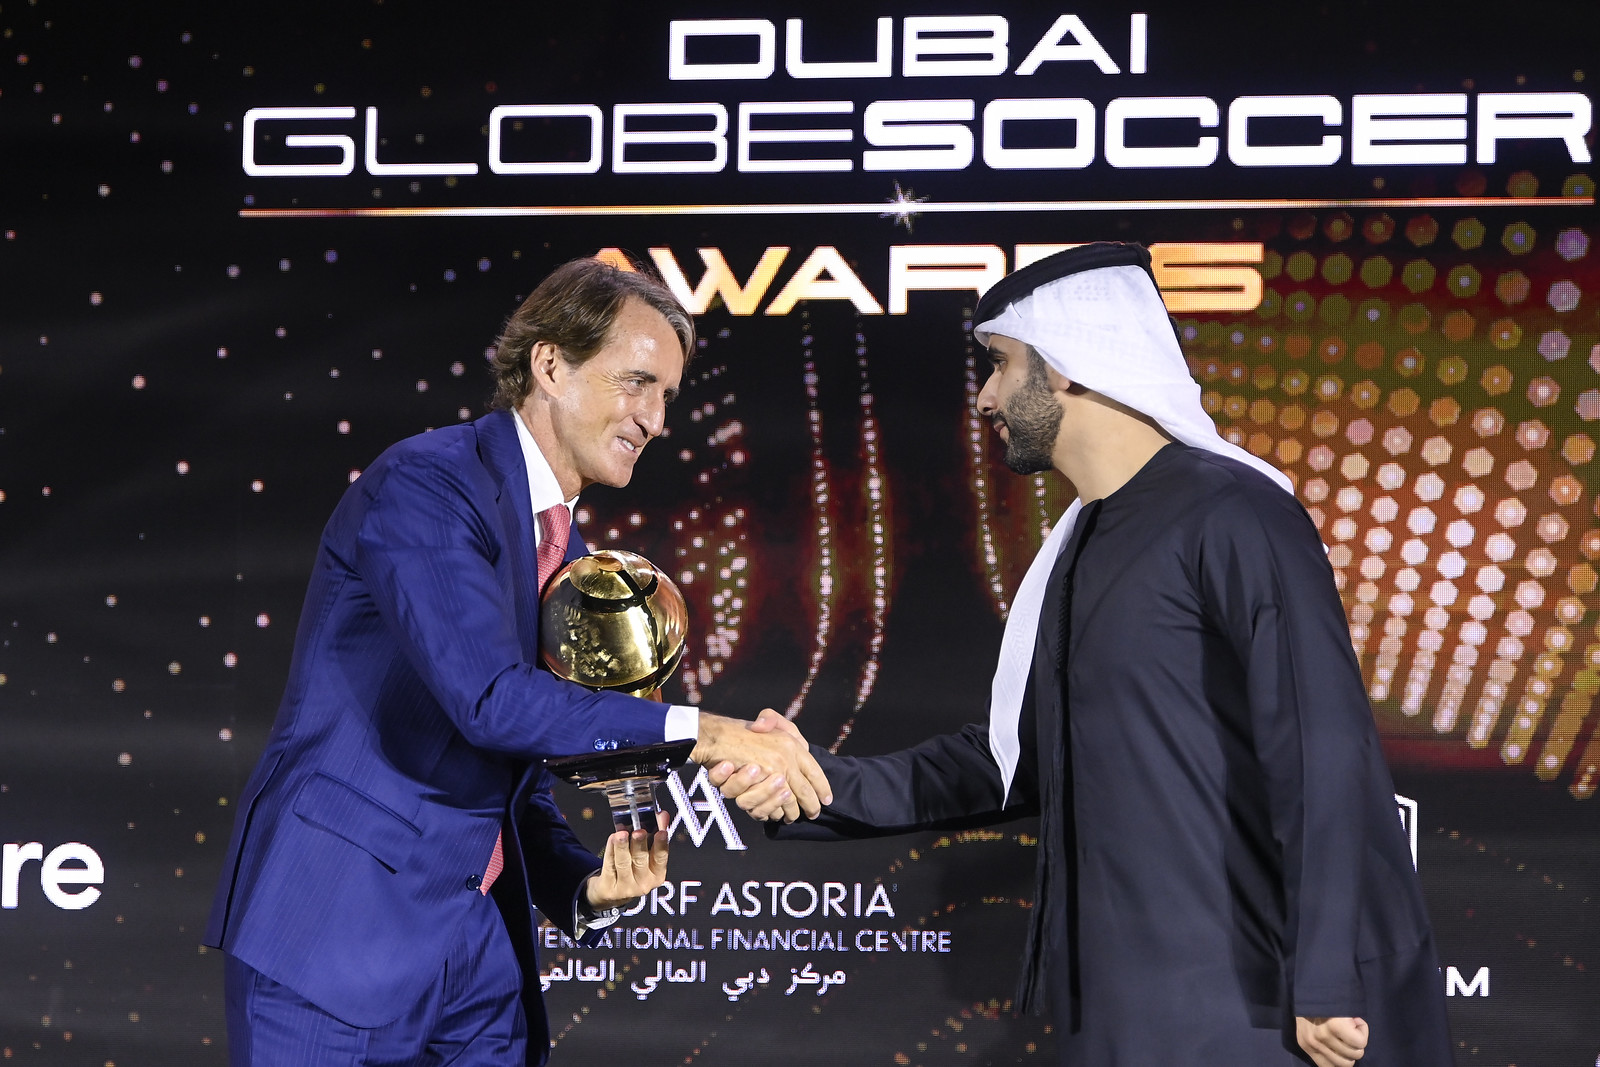 Dubai Globe Soccer Award 2021 - Tredicesima Edizione.